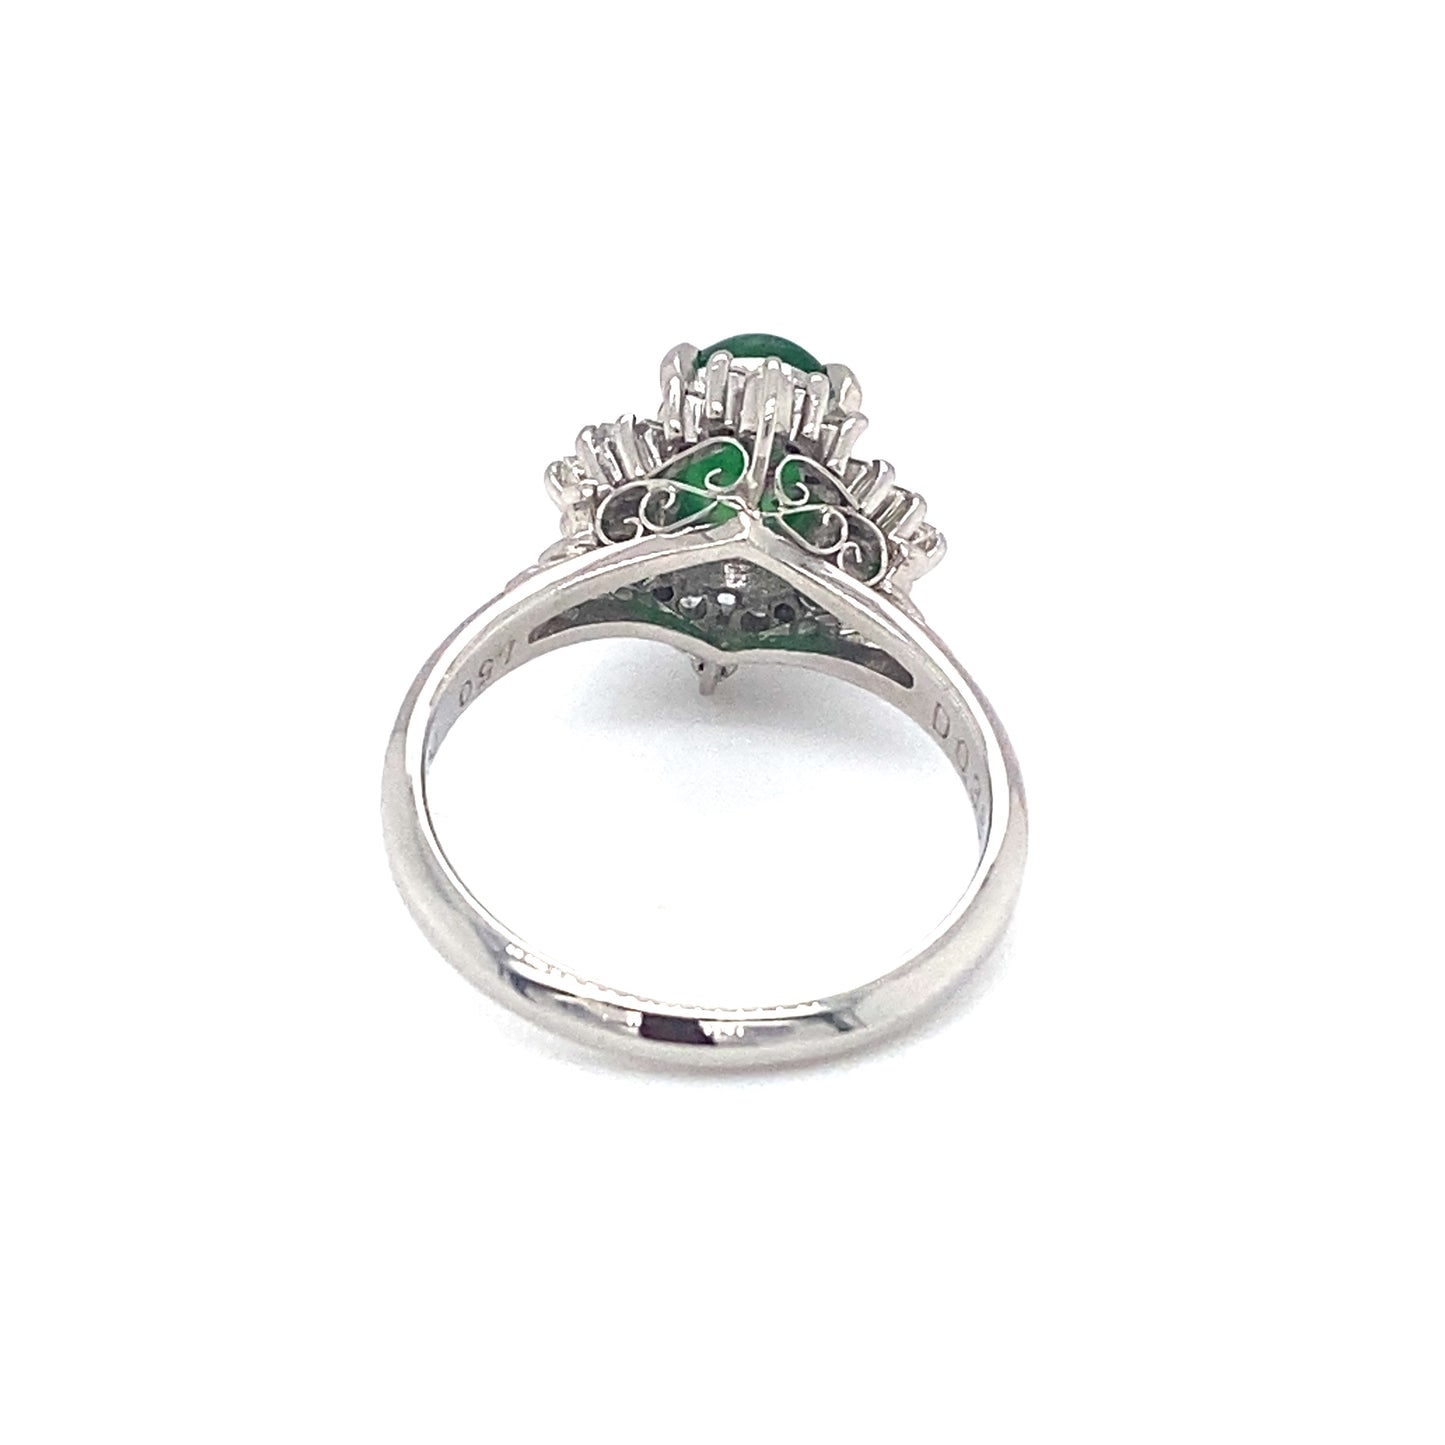 Circa 2000s 1.50ct GIA Natural Jade and Diamond Ring in Platinum